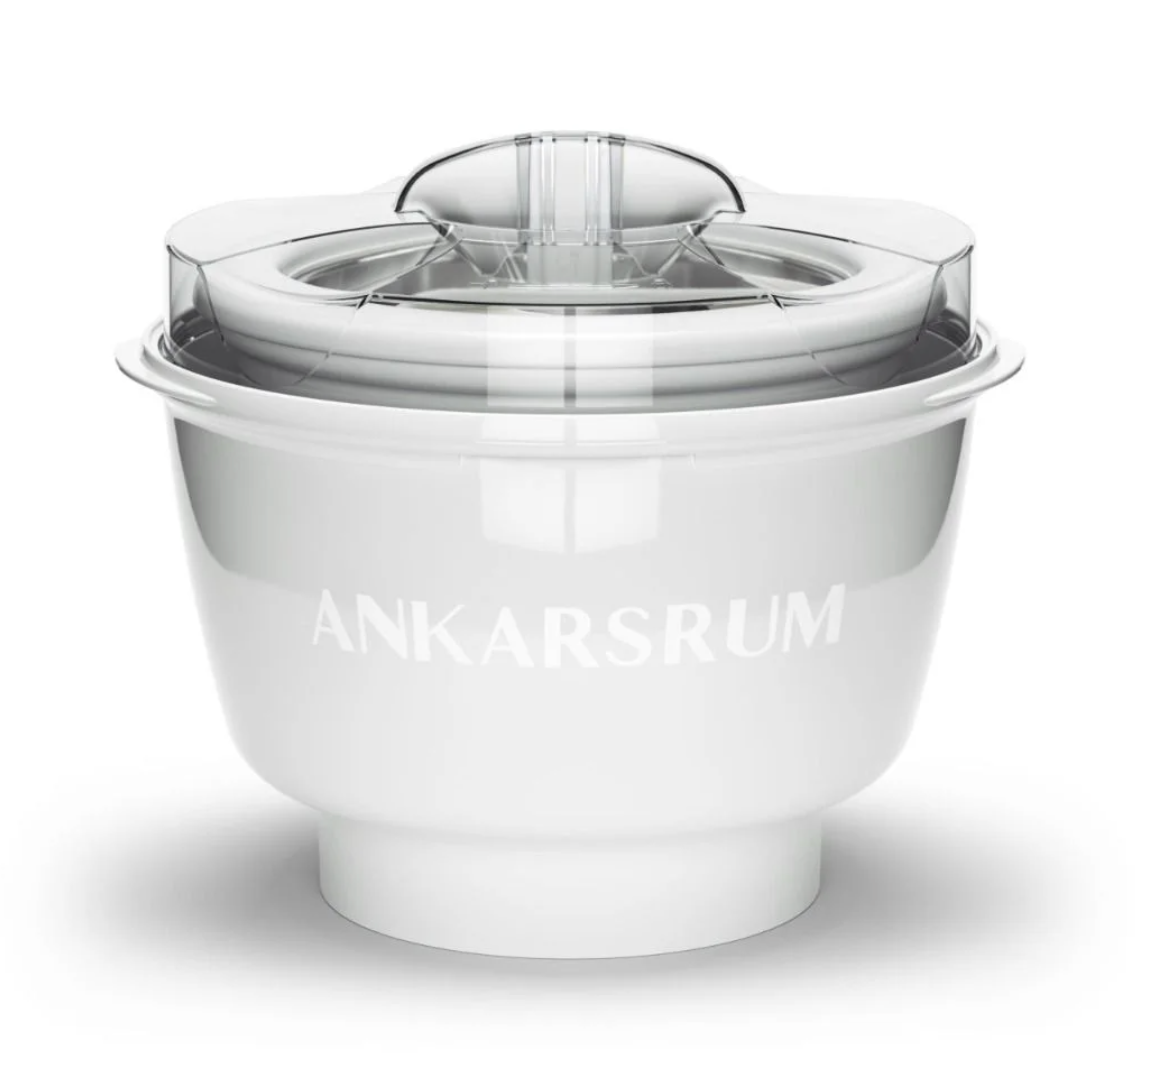 Ankarsrum Ice Cream Maker with Spatula